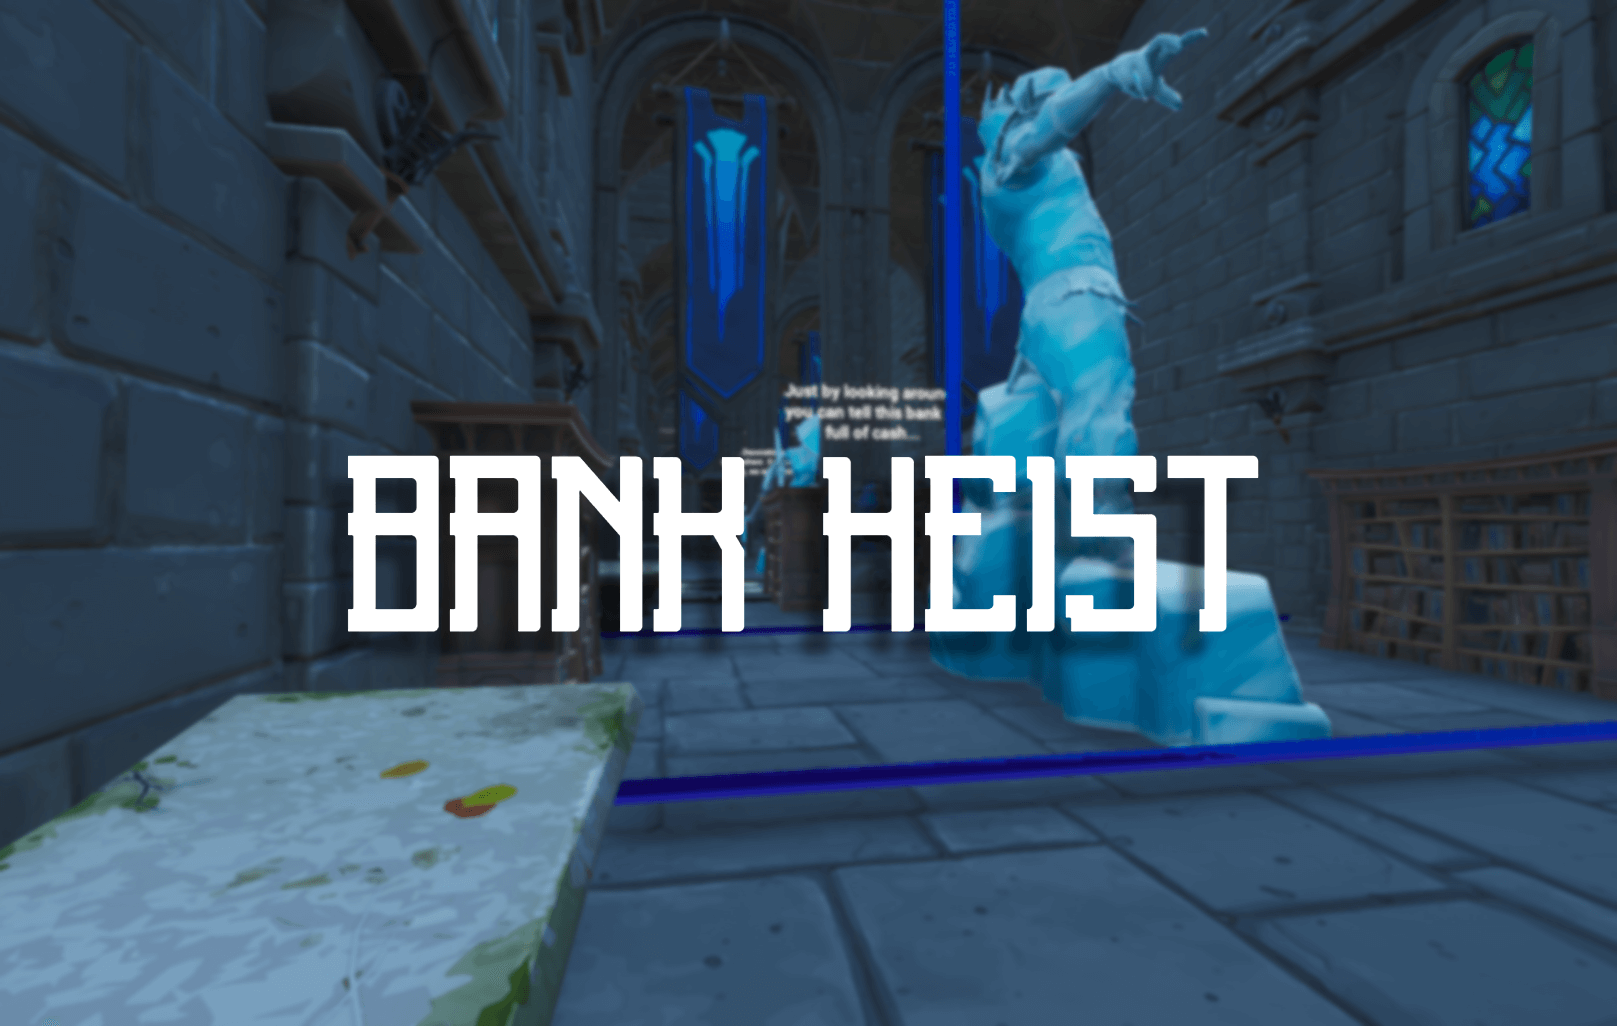 BANK HEIST